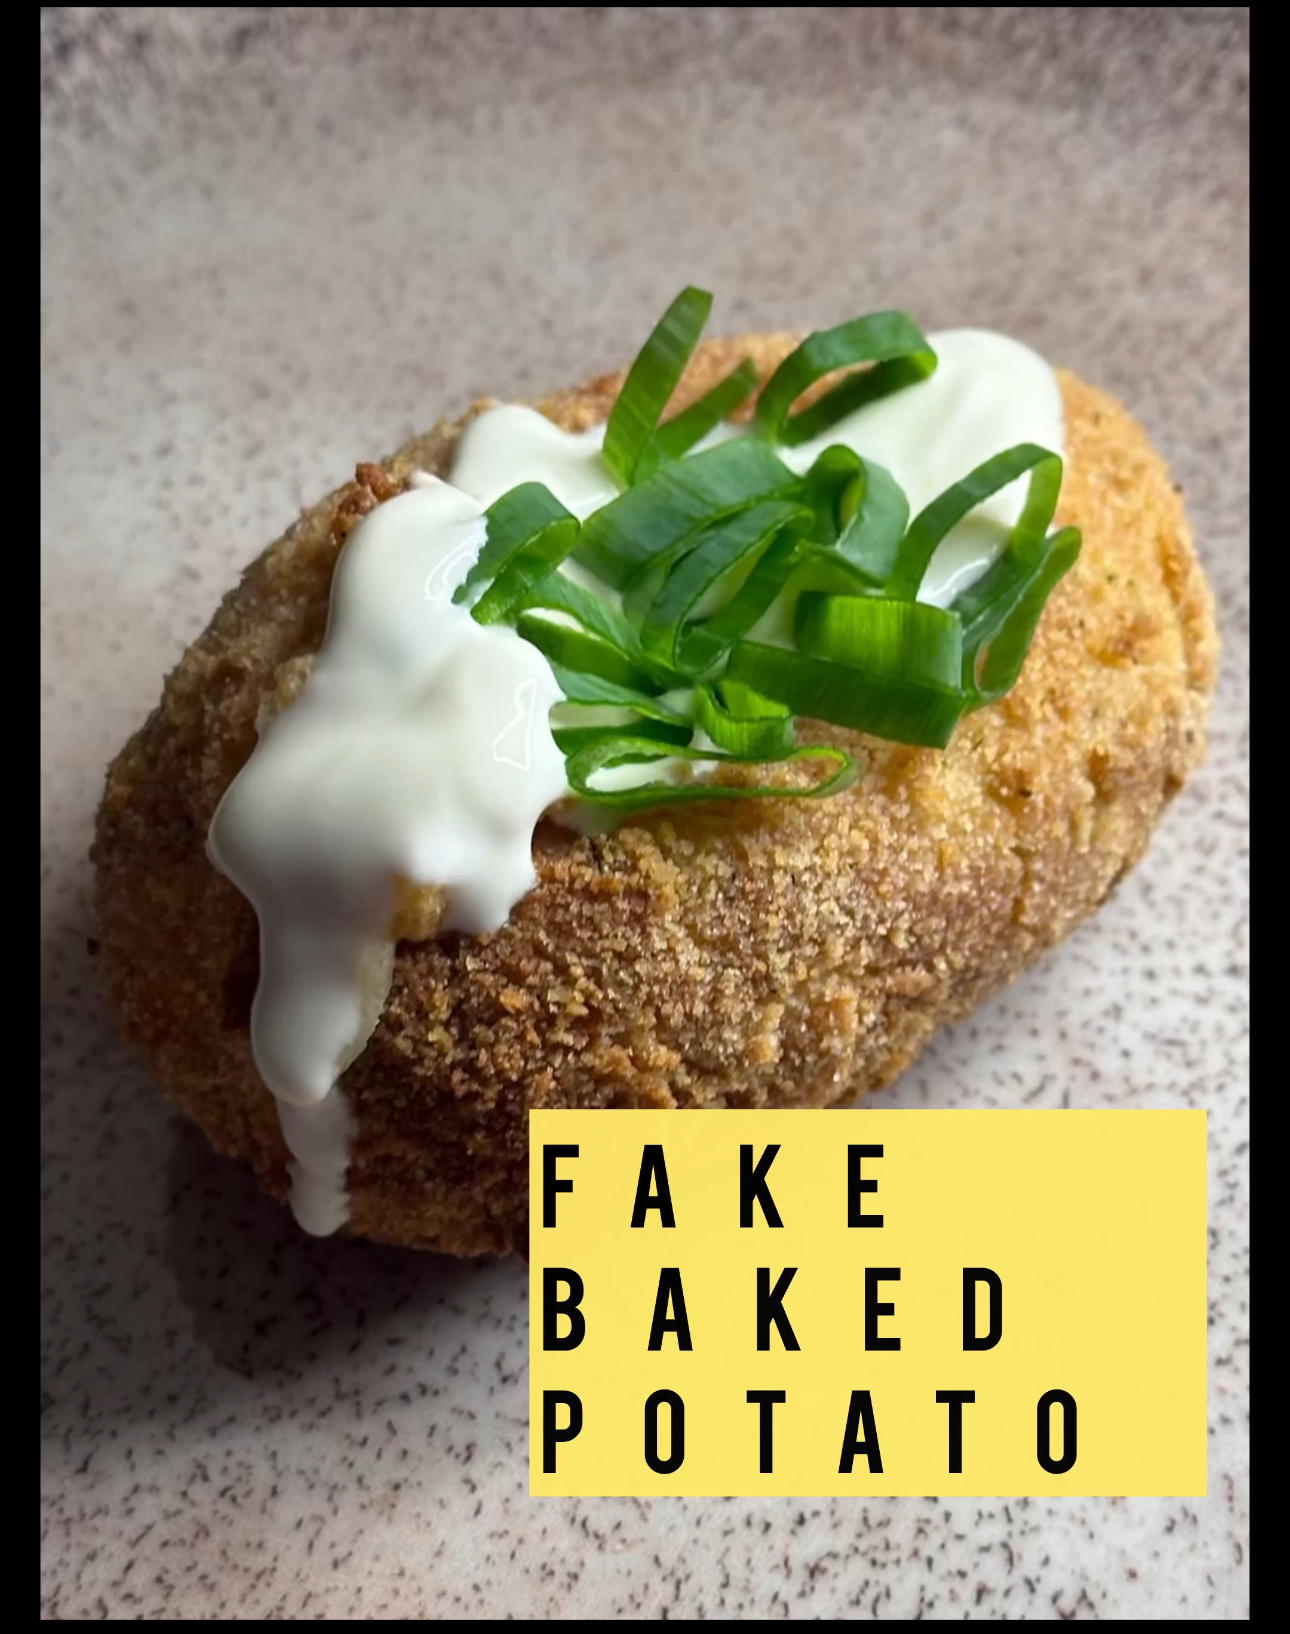 Fake baked potatoes